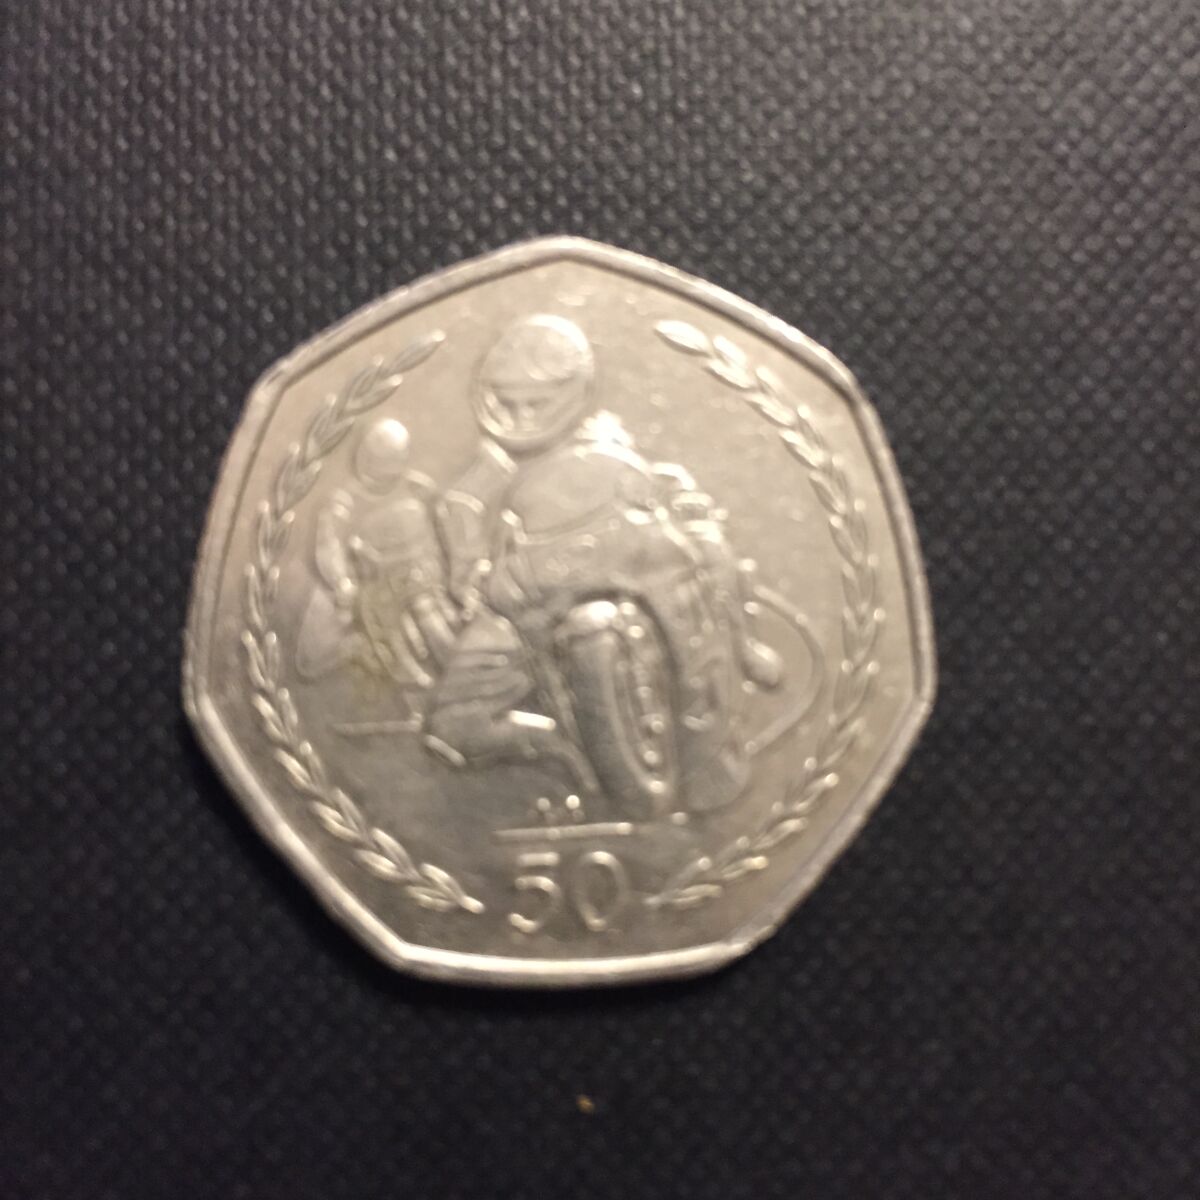 Commemorative coin, Isle of Man.